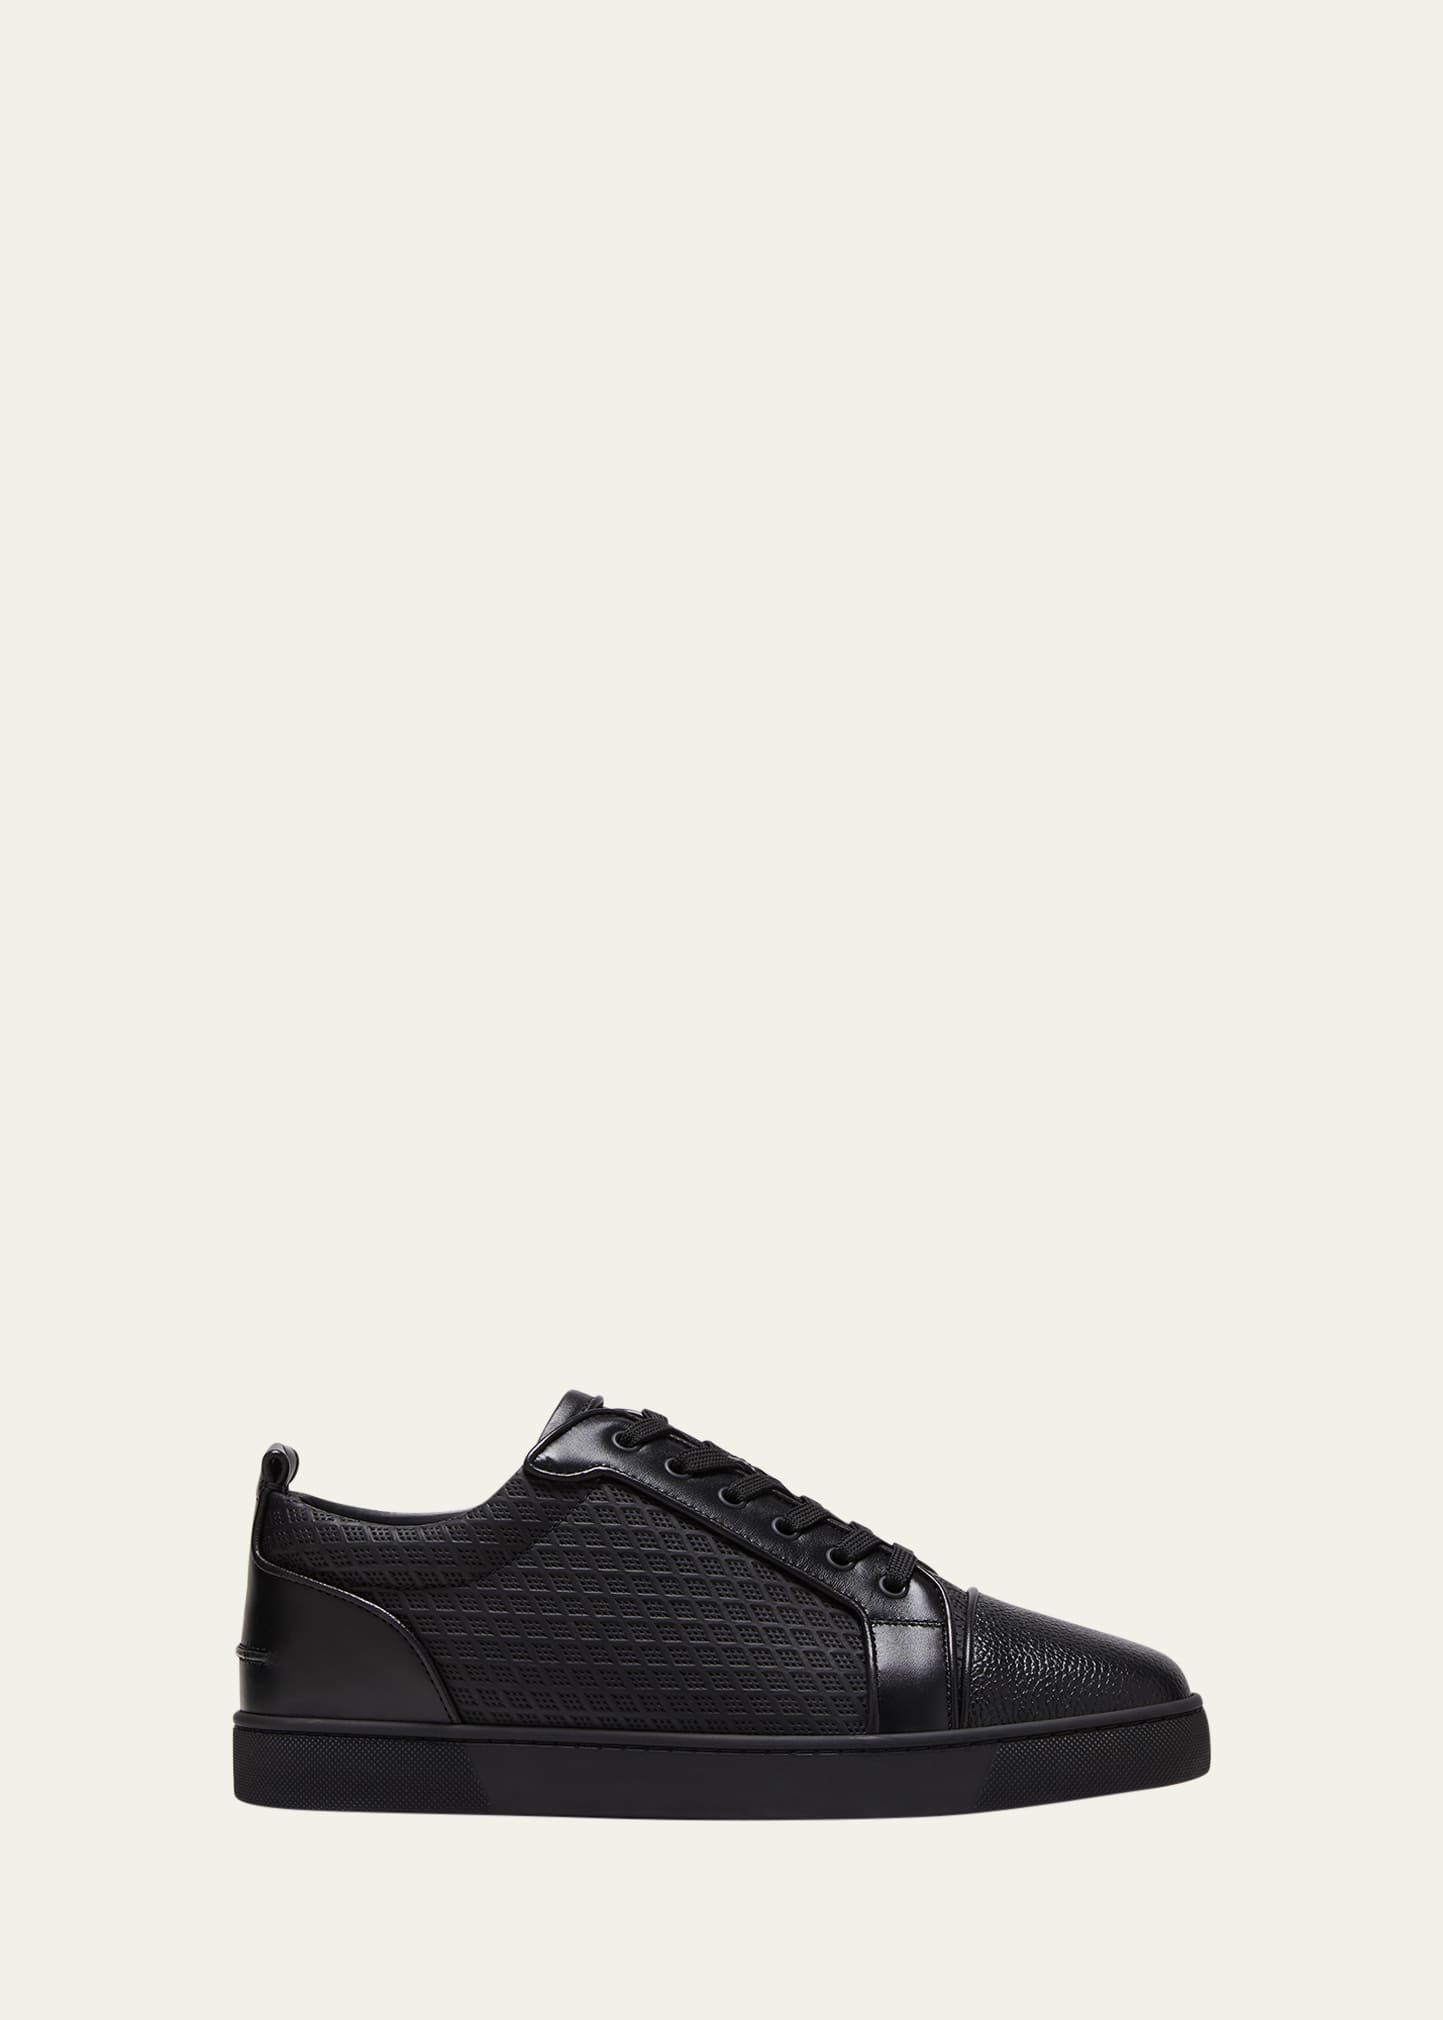 Louis Junior - Sneakers - Calf leather - White - Christian Louboutin